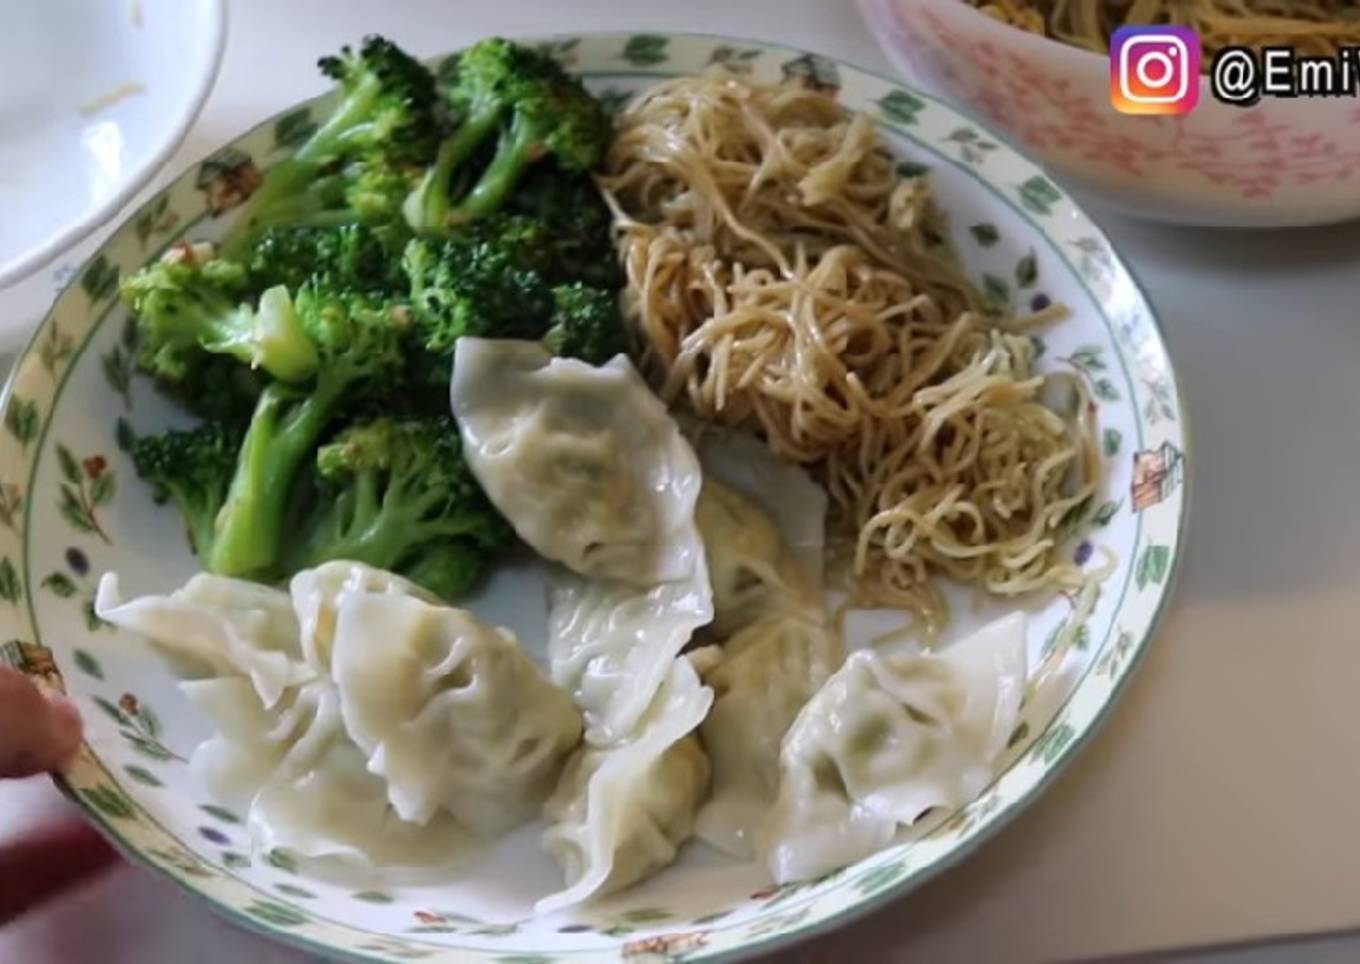 Dumpling, Noodle & Broccoli